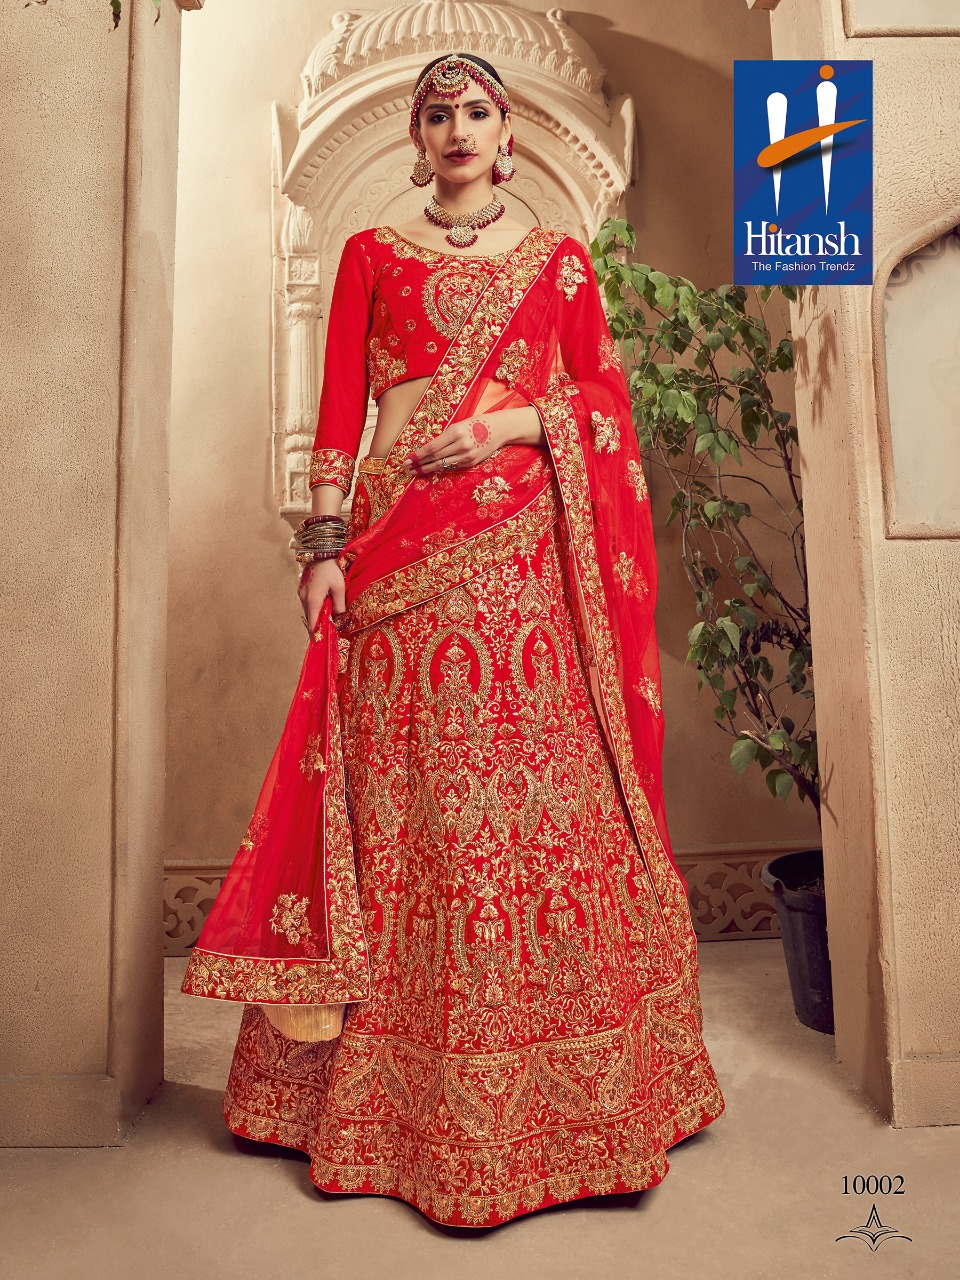 Hitansh Fashion The Royal Bride 10002